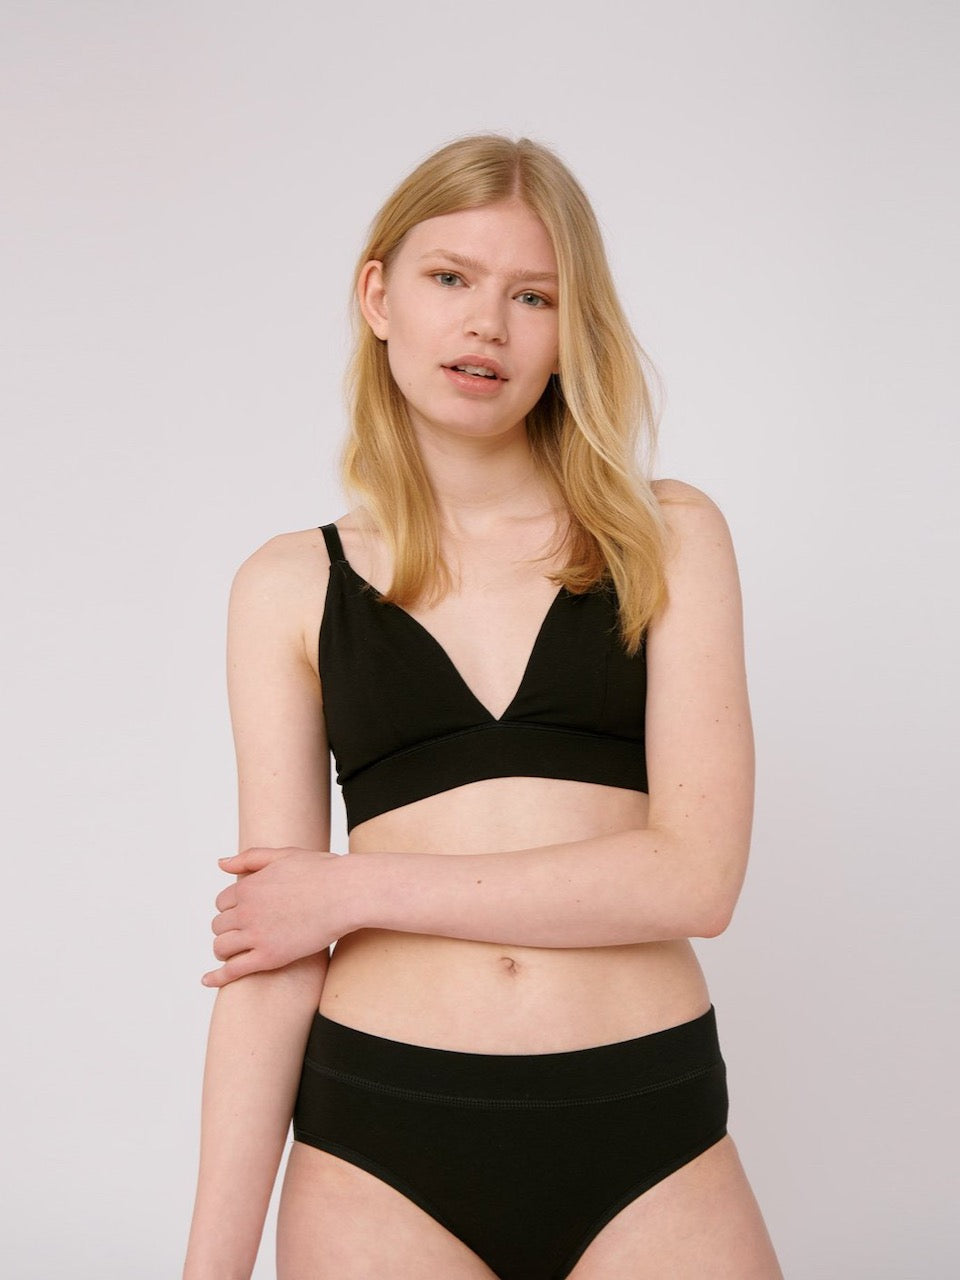 A woman wearing an Organic Basics Triangle Bra ⋅ organic cotton – Black bikini top.